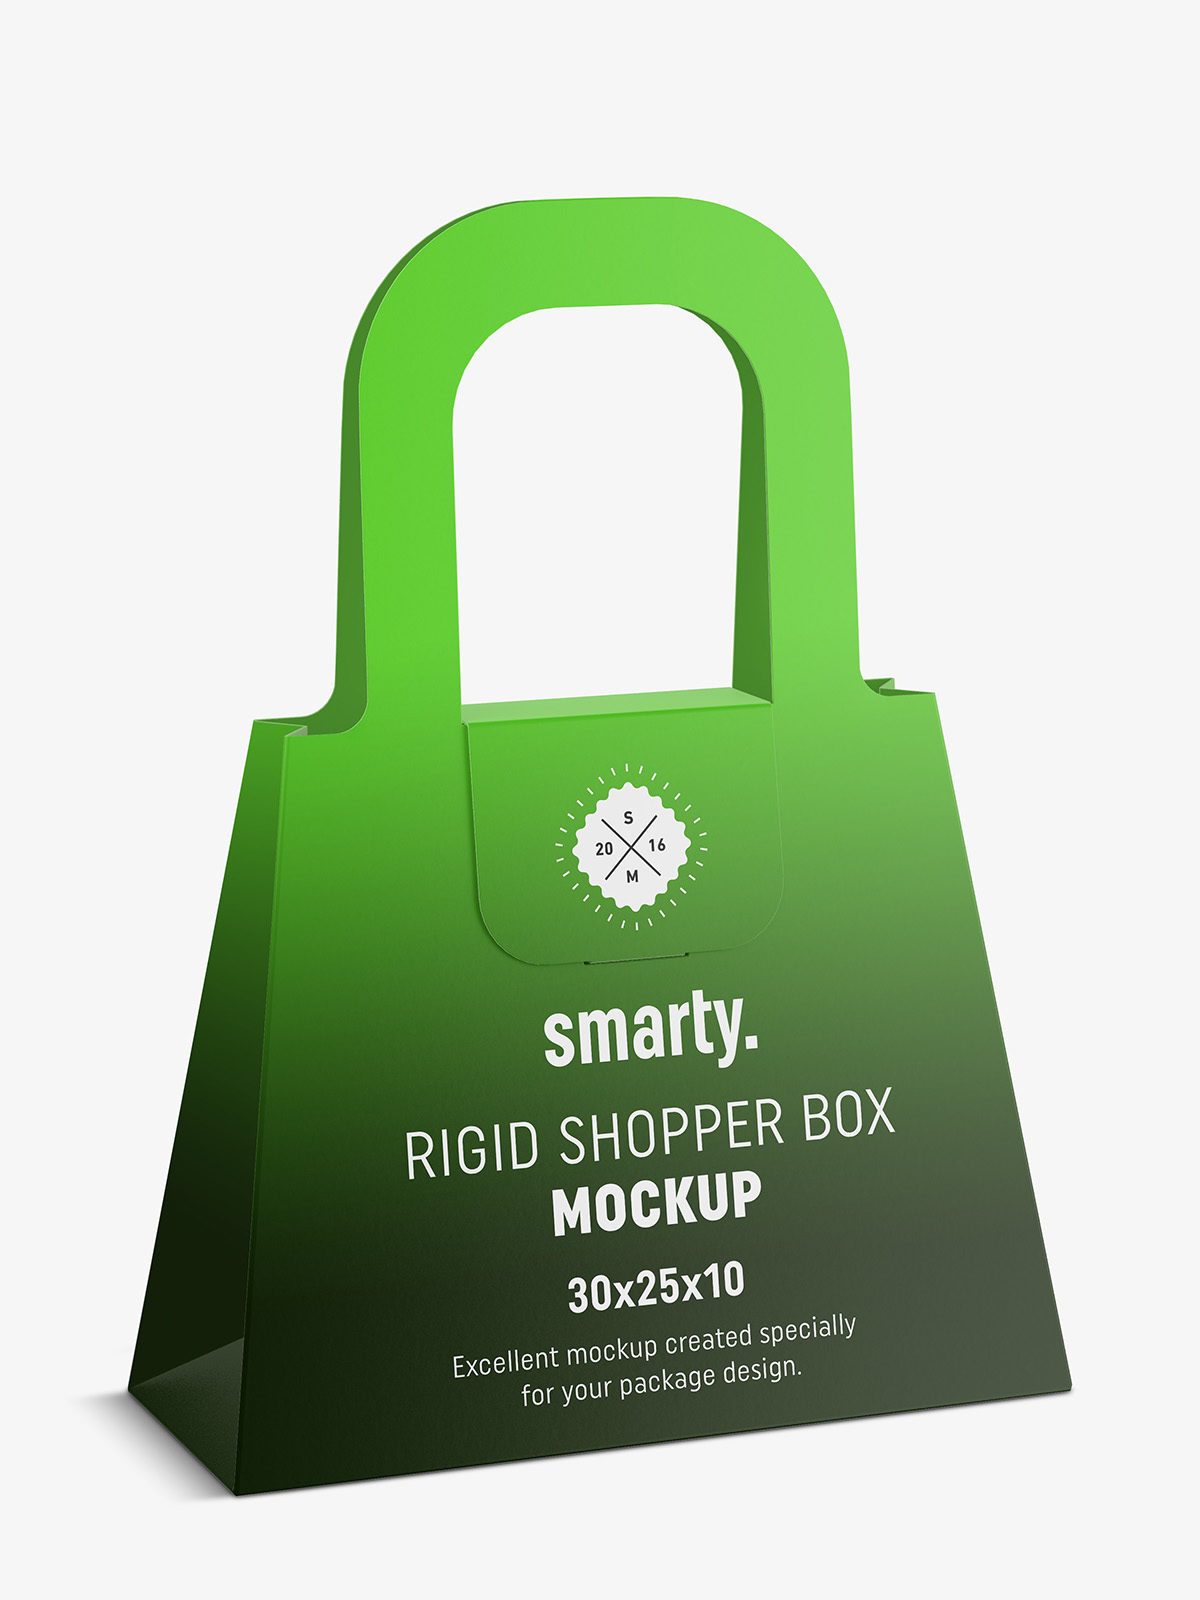 Download Rigid shopper box mockup - Smarty Mockups